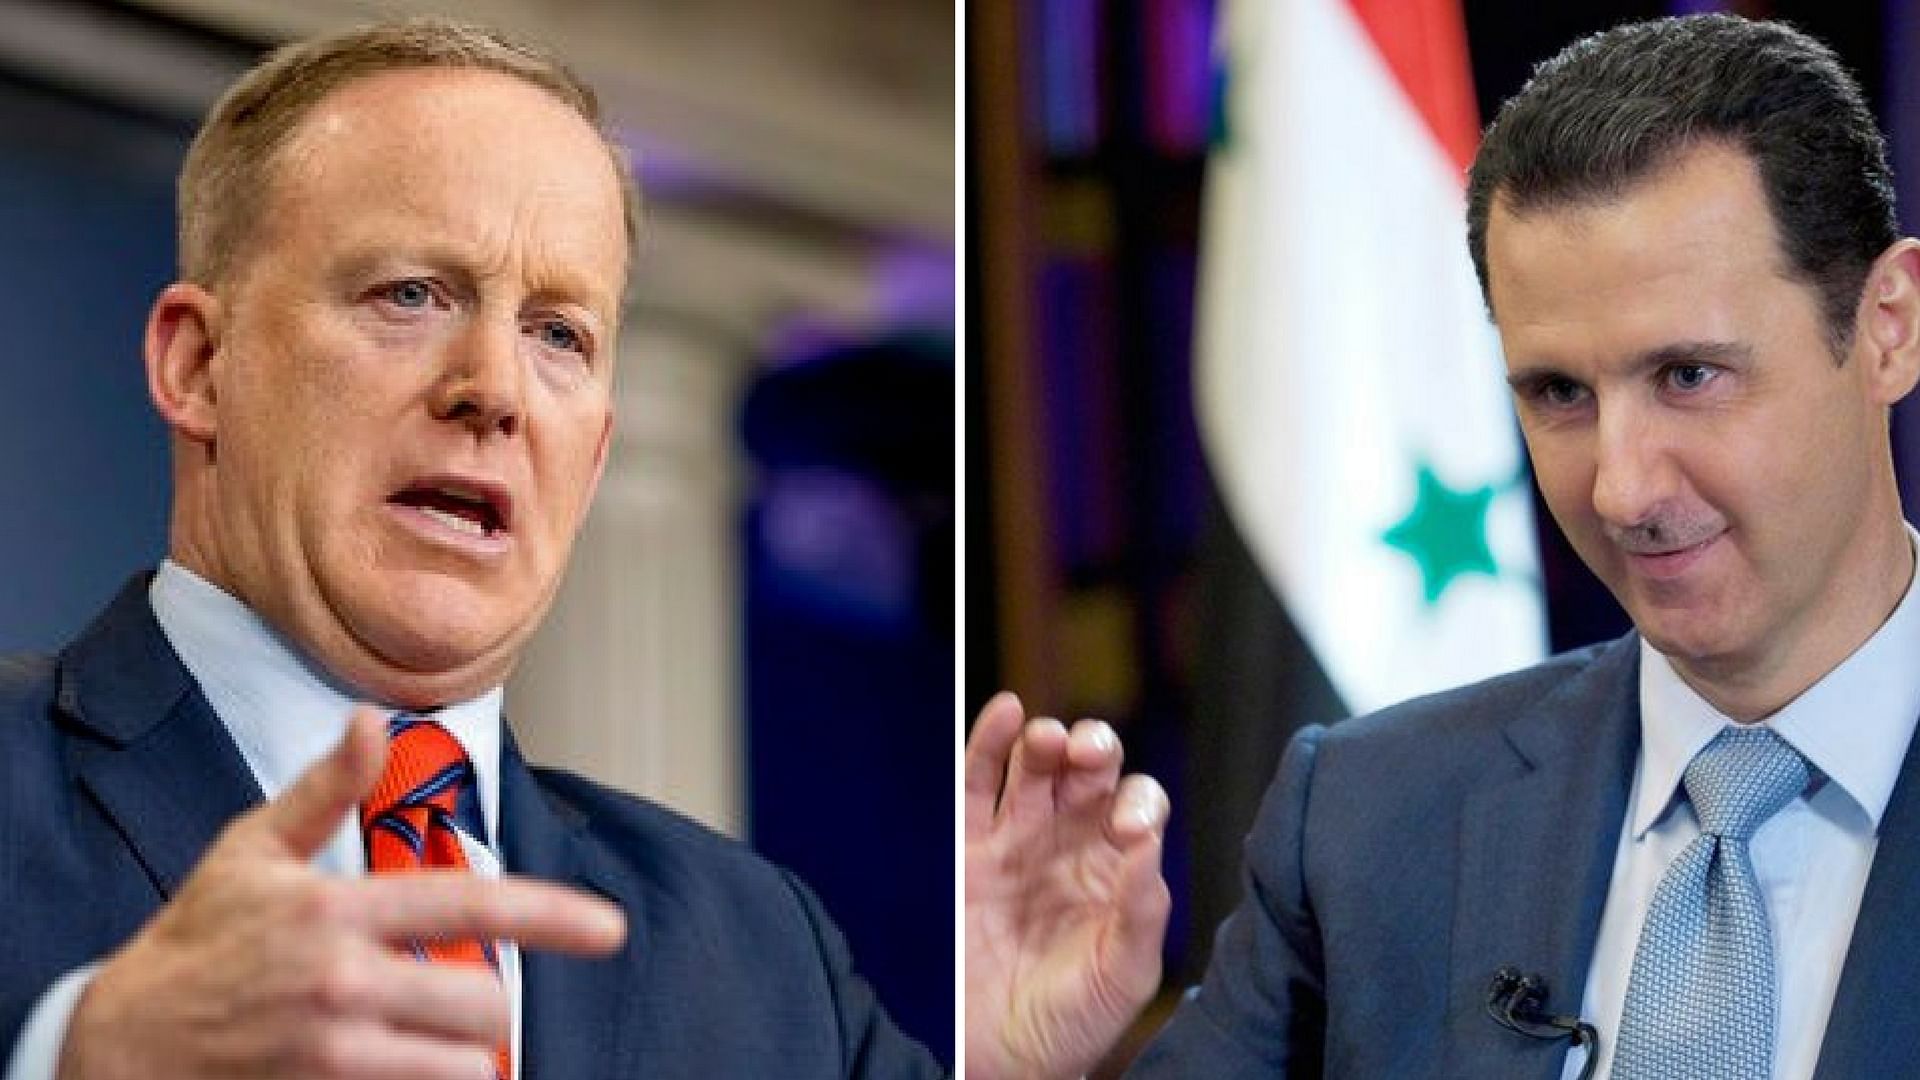 US Press Secretary Sean Spicer and Syrian President Bashar al-Assad.